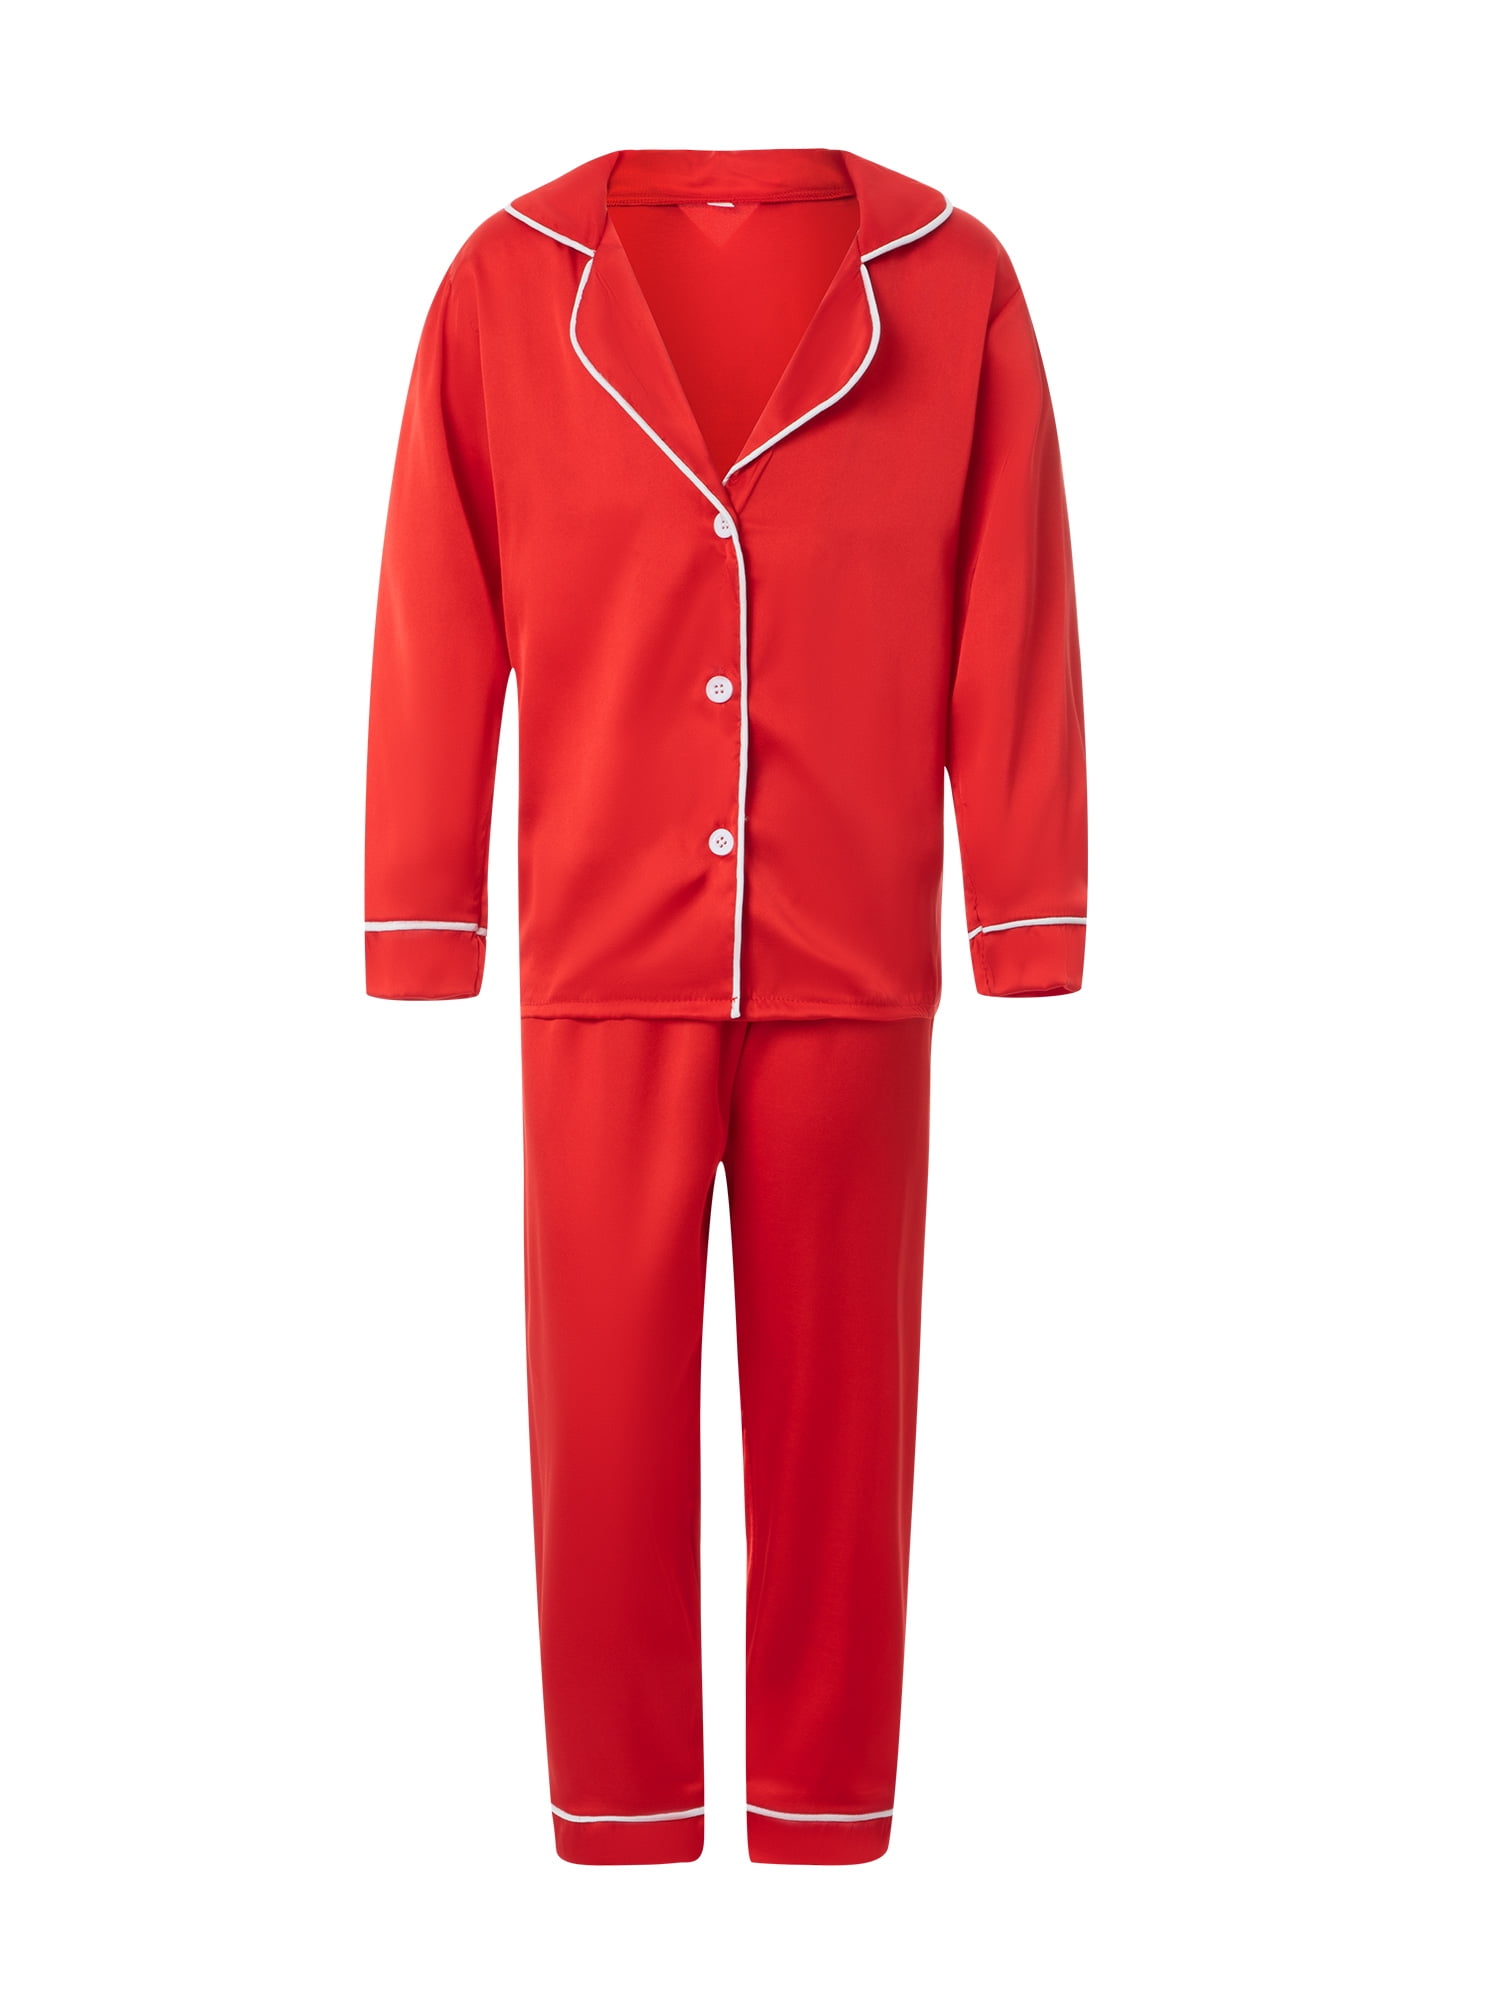 Lauren Conrad Grey Wolf Pajama Sets for Women